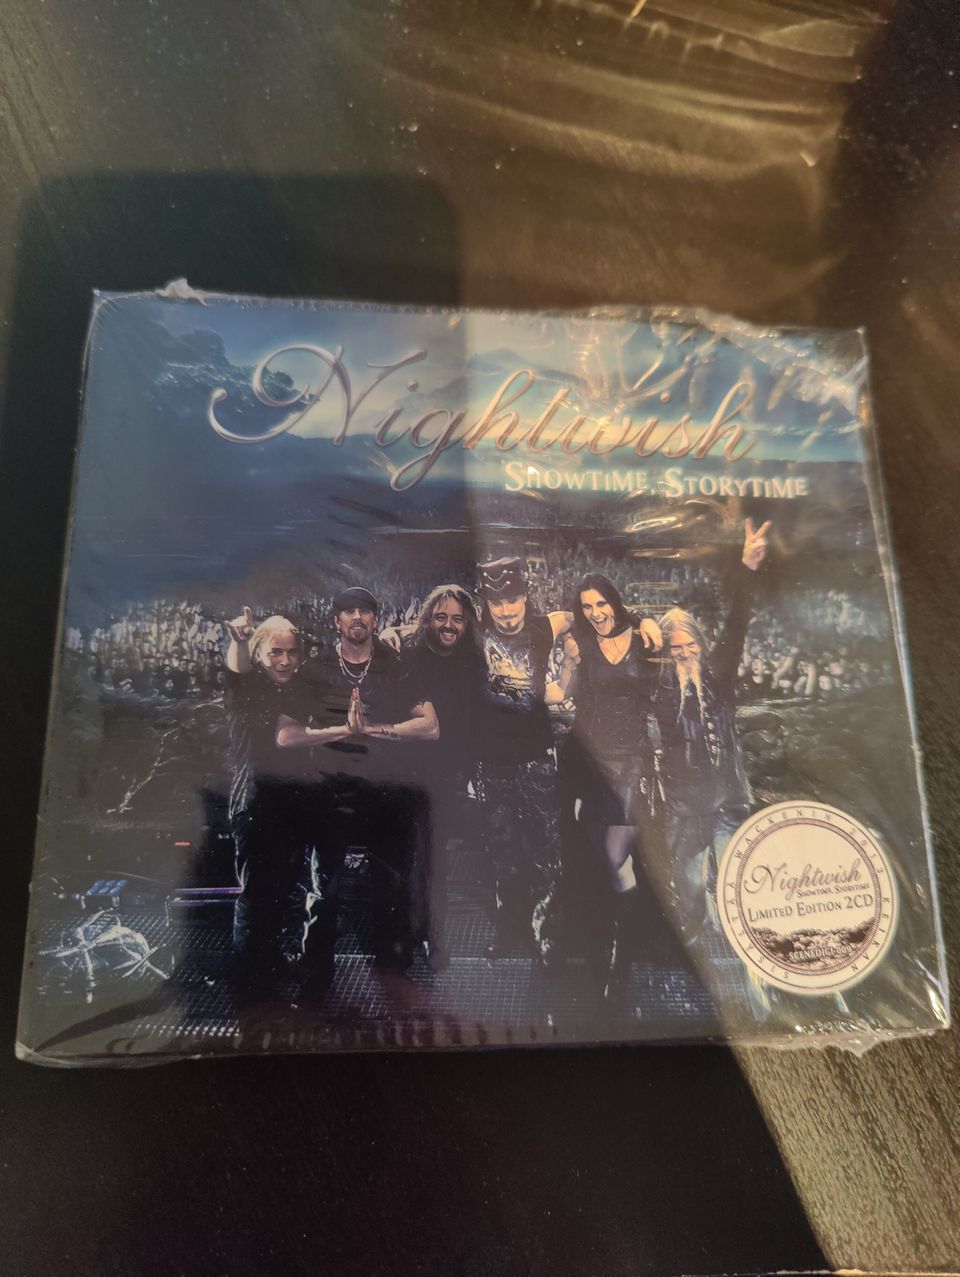 Nightwish Showtime, Storytime LTD. 2CD Mint